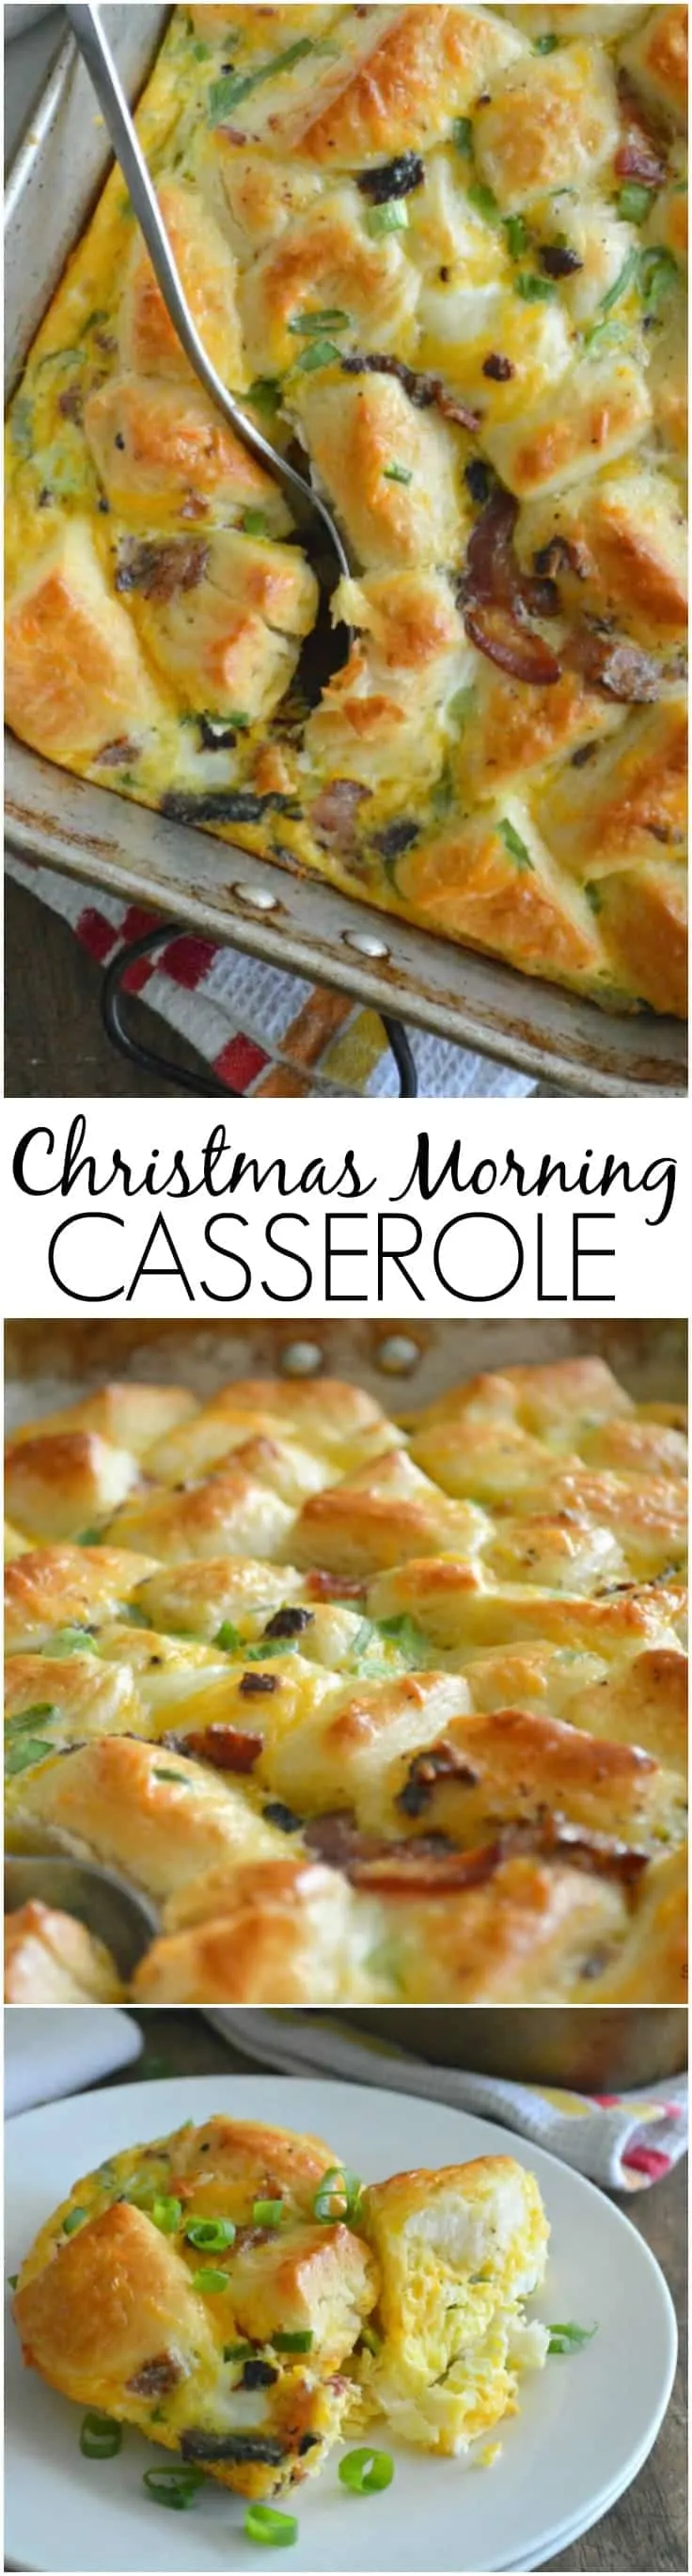 Christmas Morning Casserole